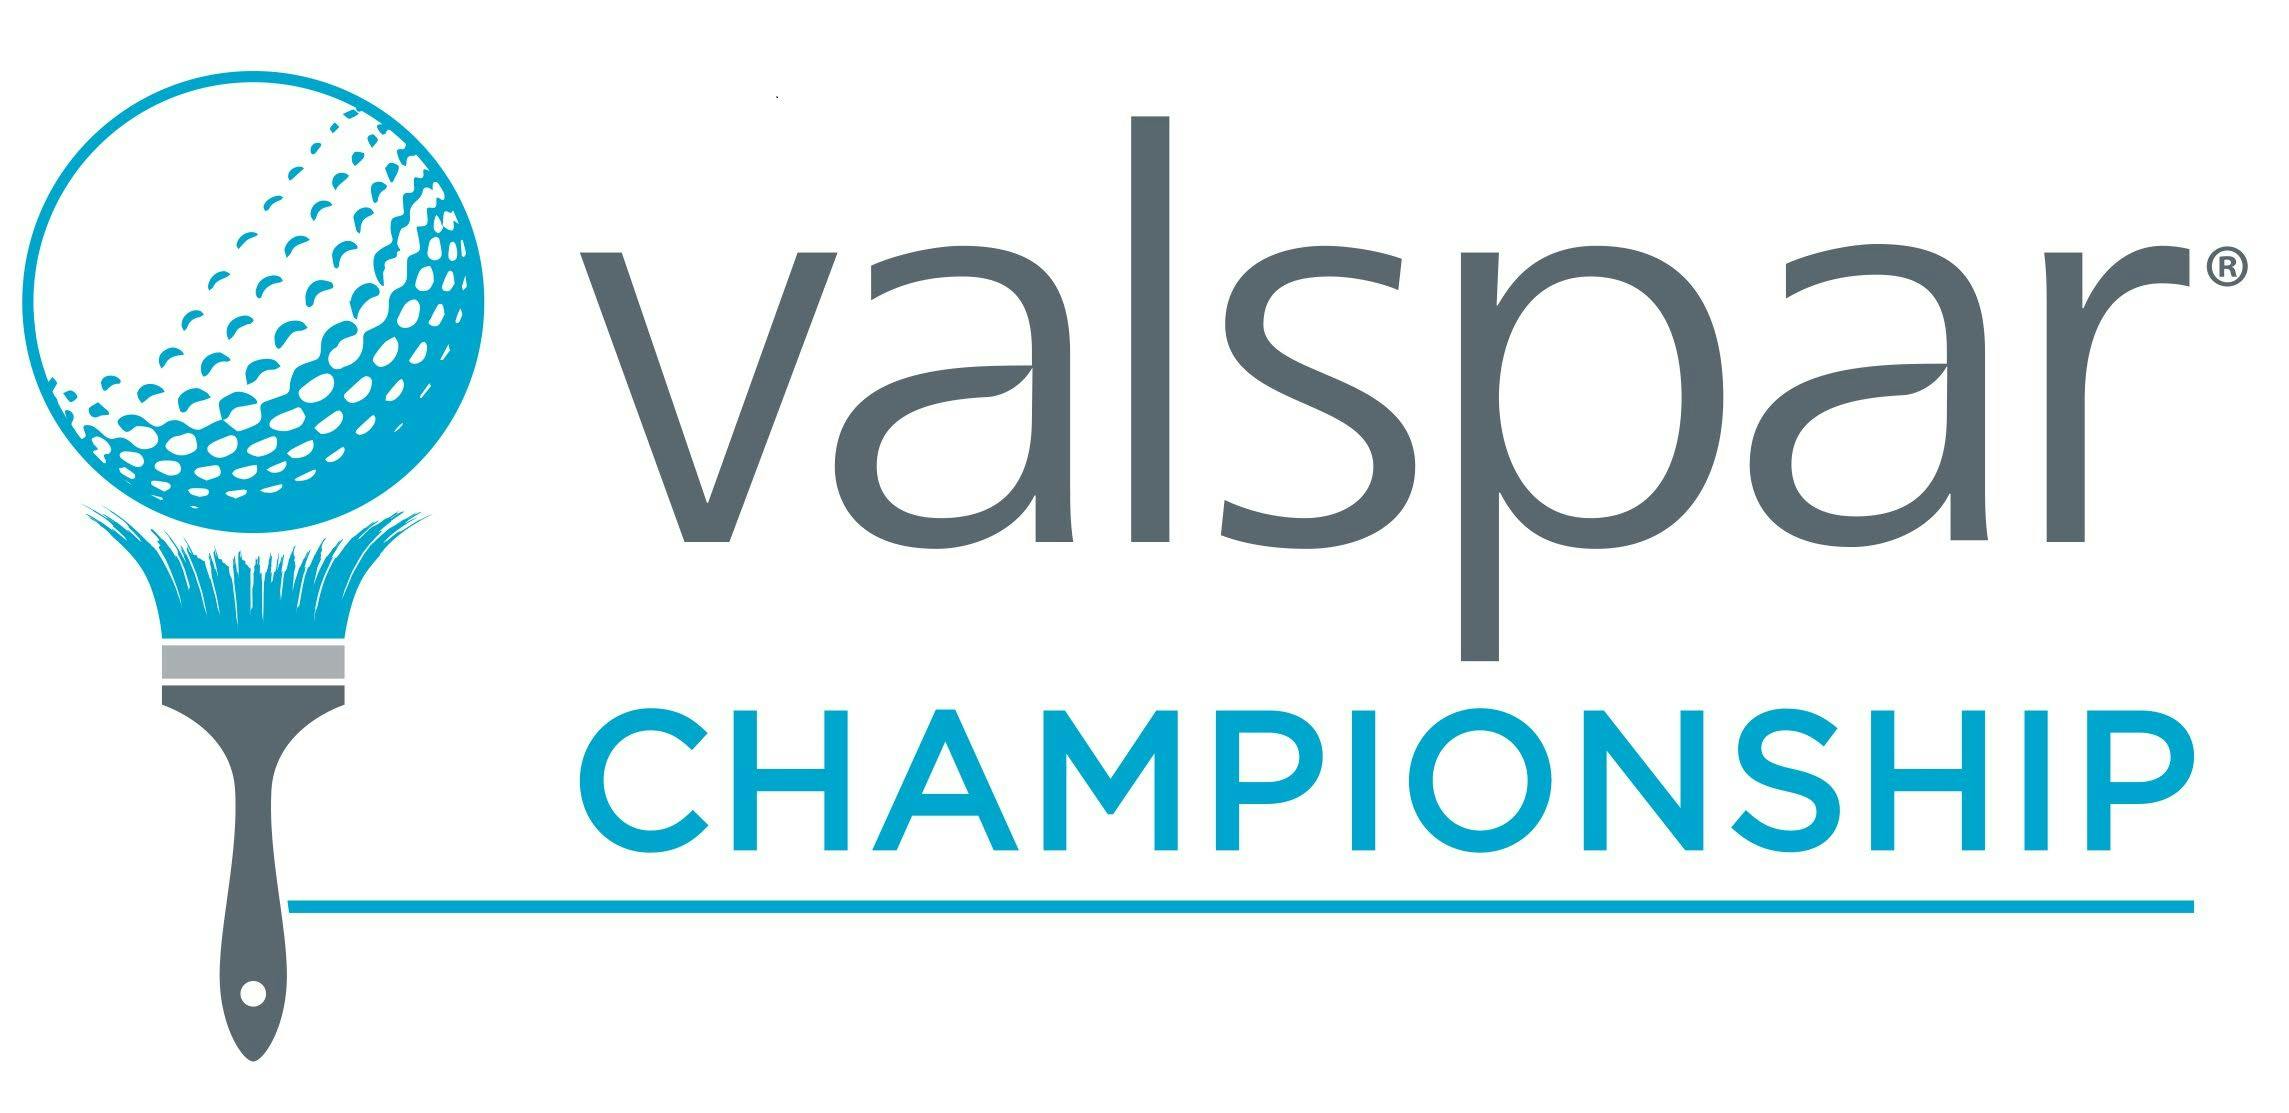 The Valspar Championship